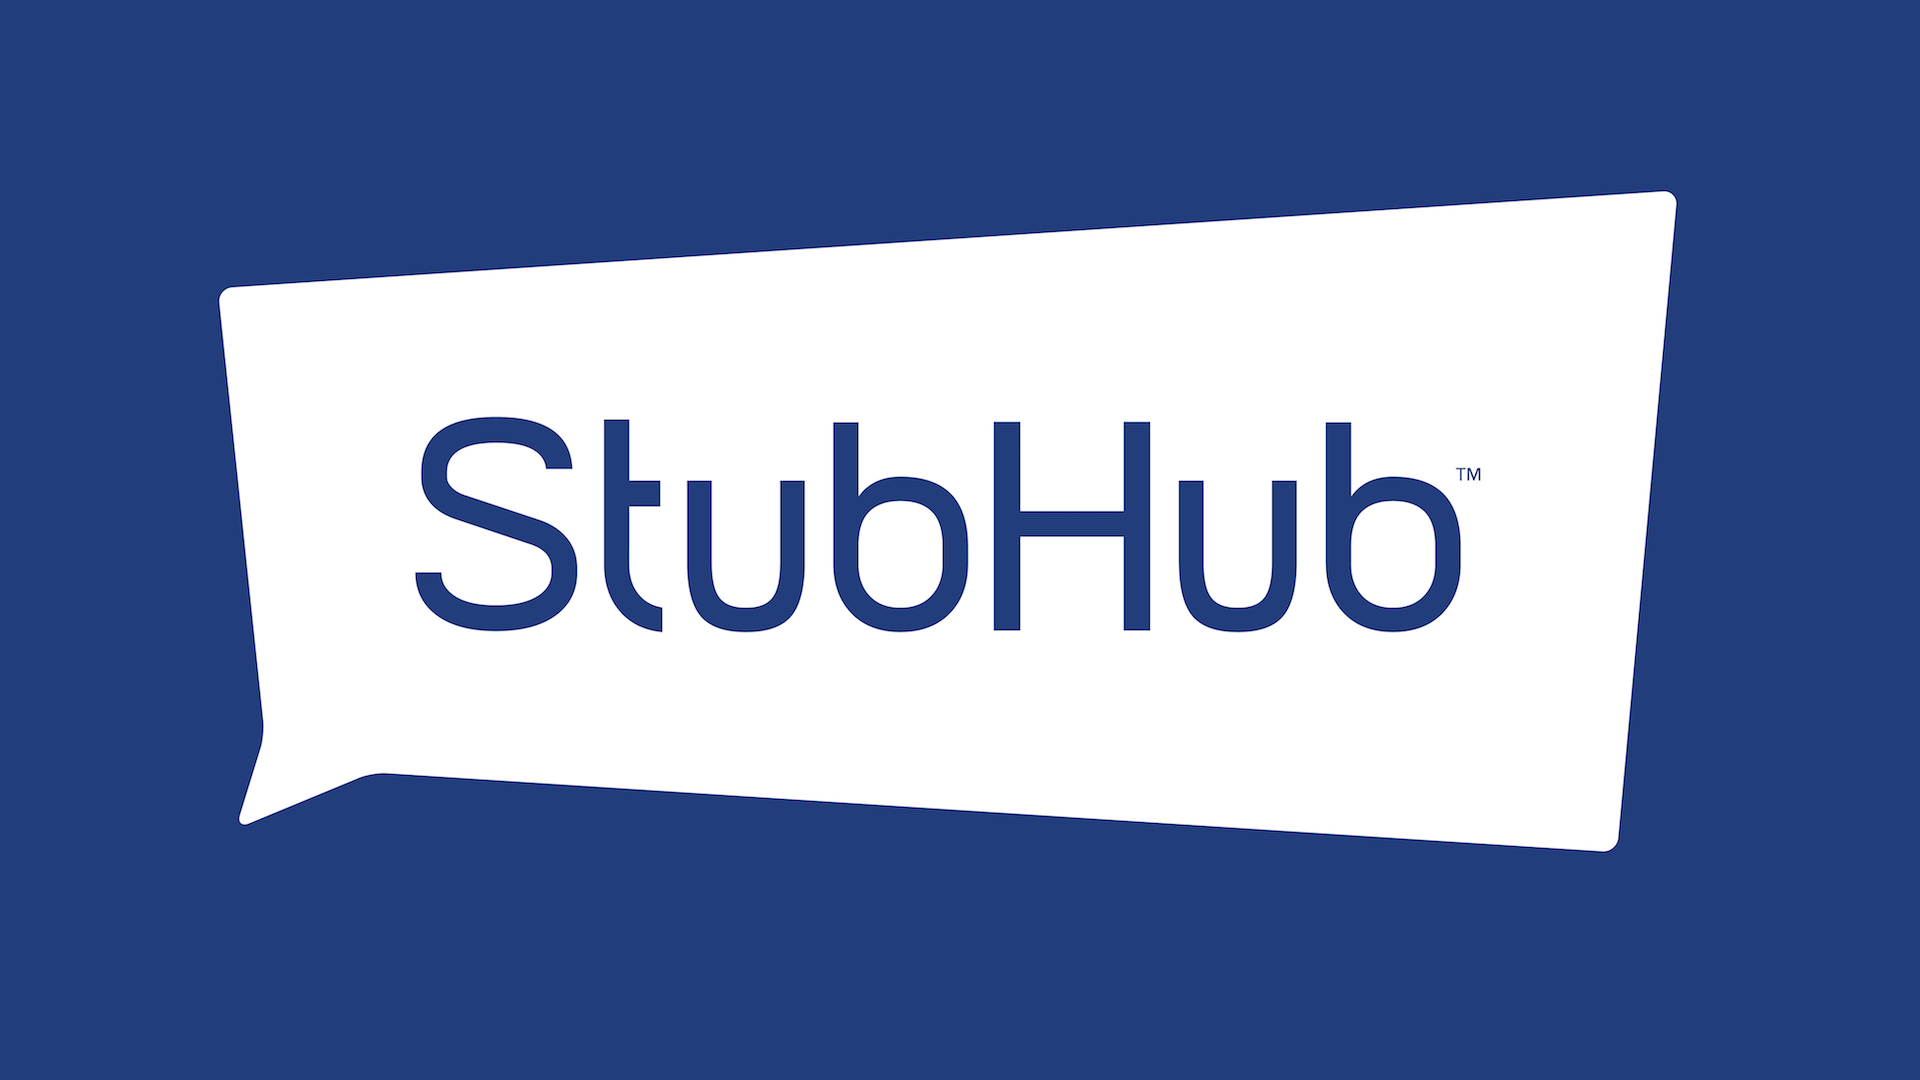 StubHub Logo - A CMO's View: StubHub rebrands itself to show it is 